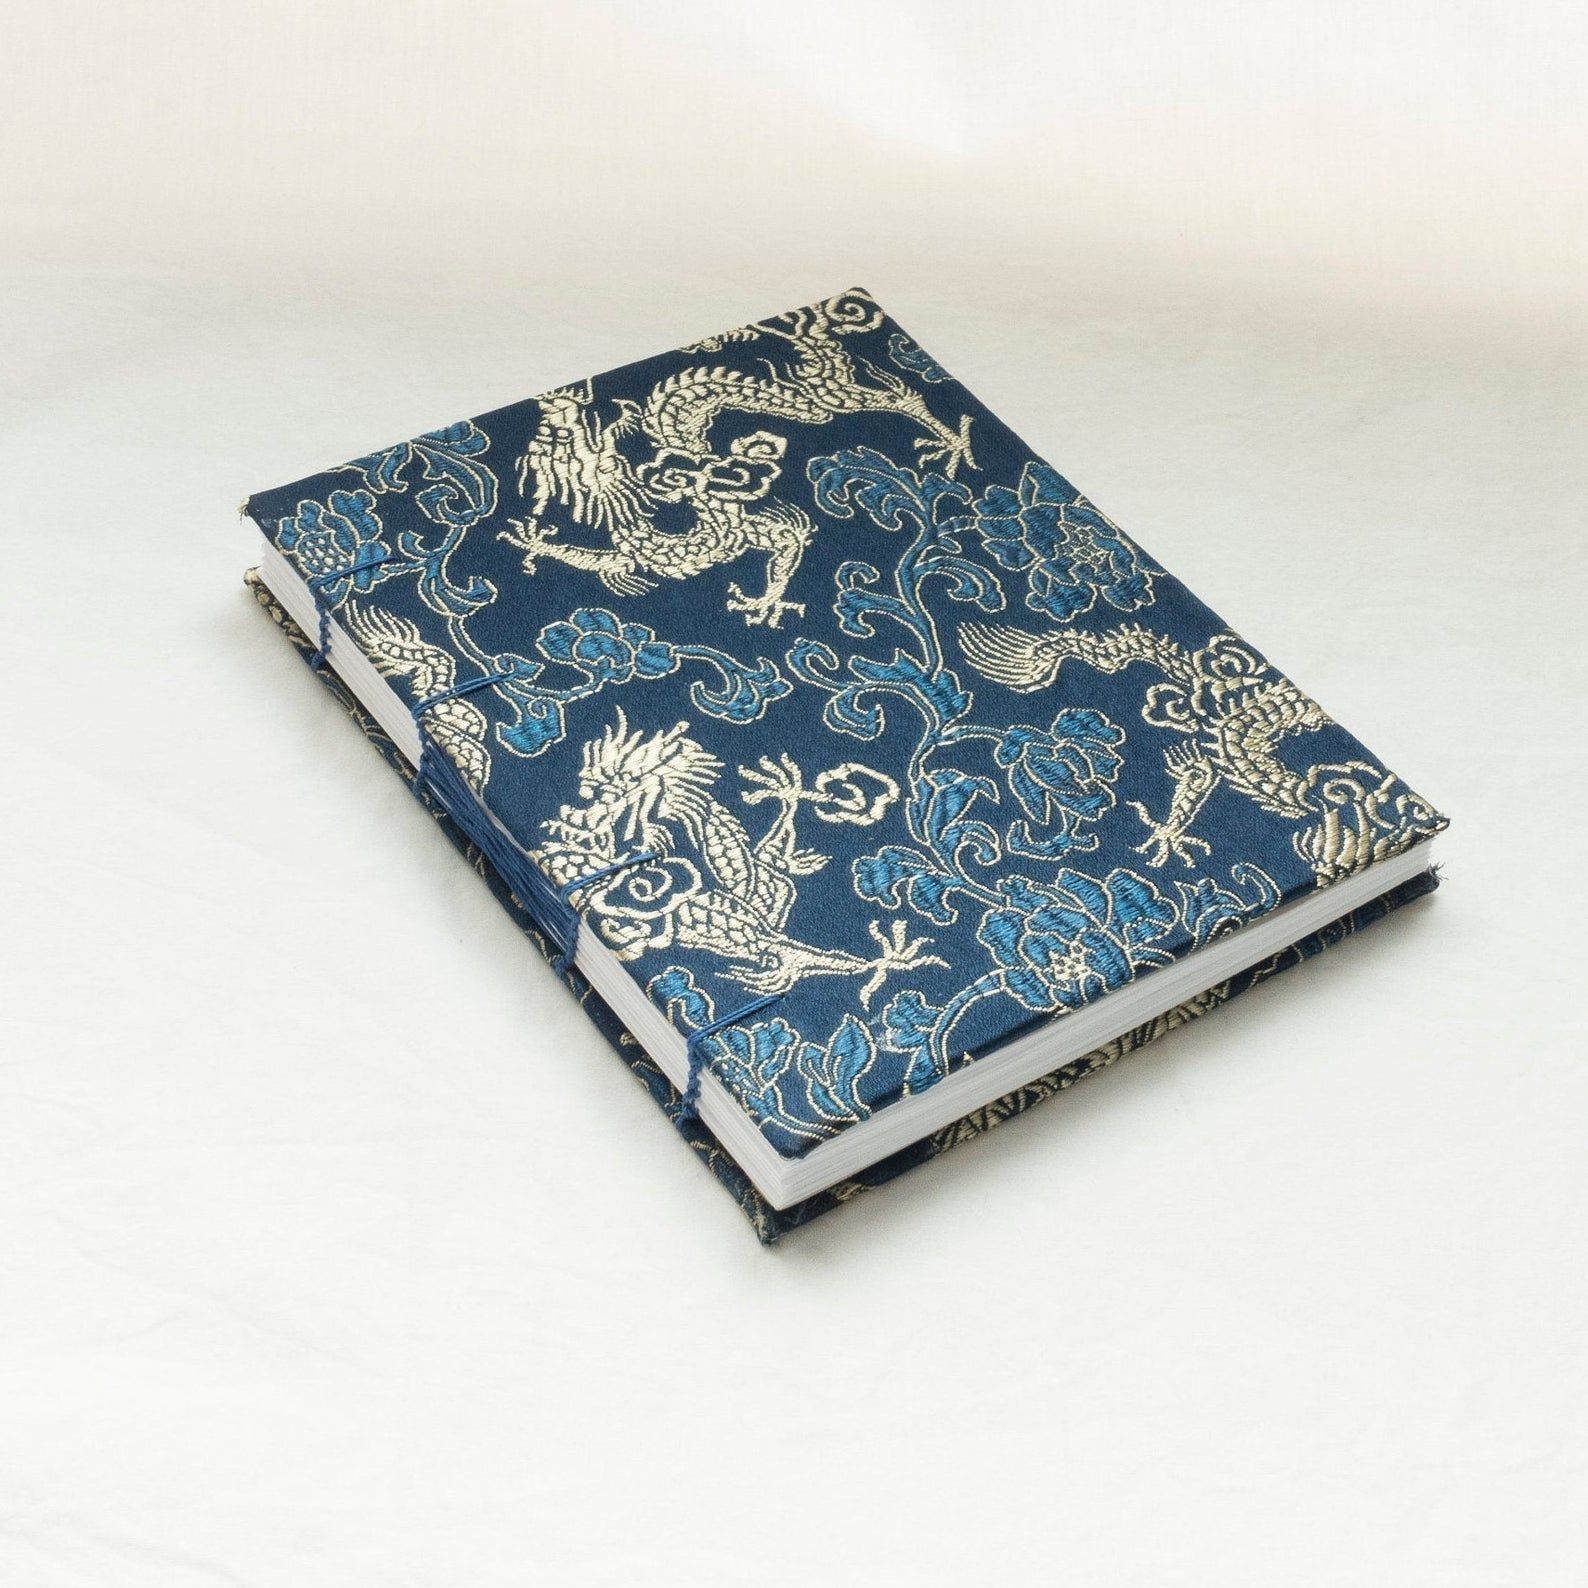 Fabric Chinese dragon journal